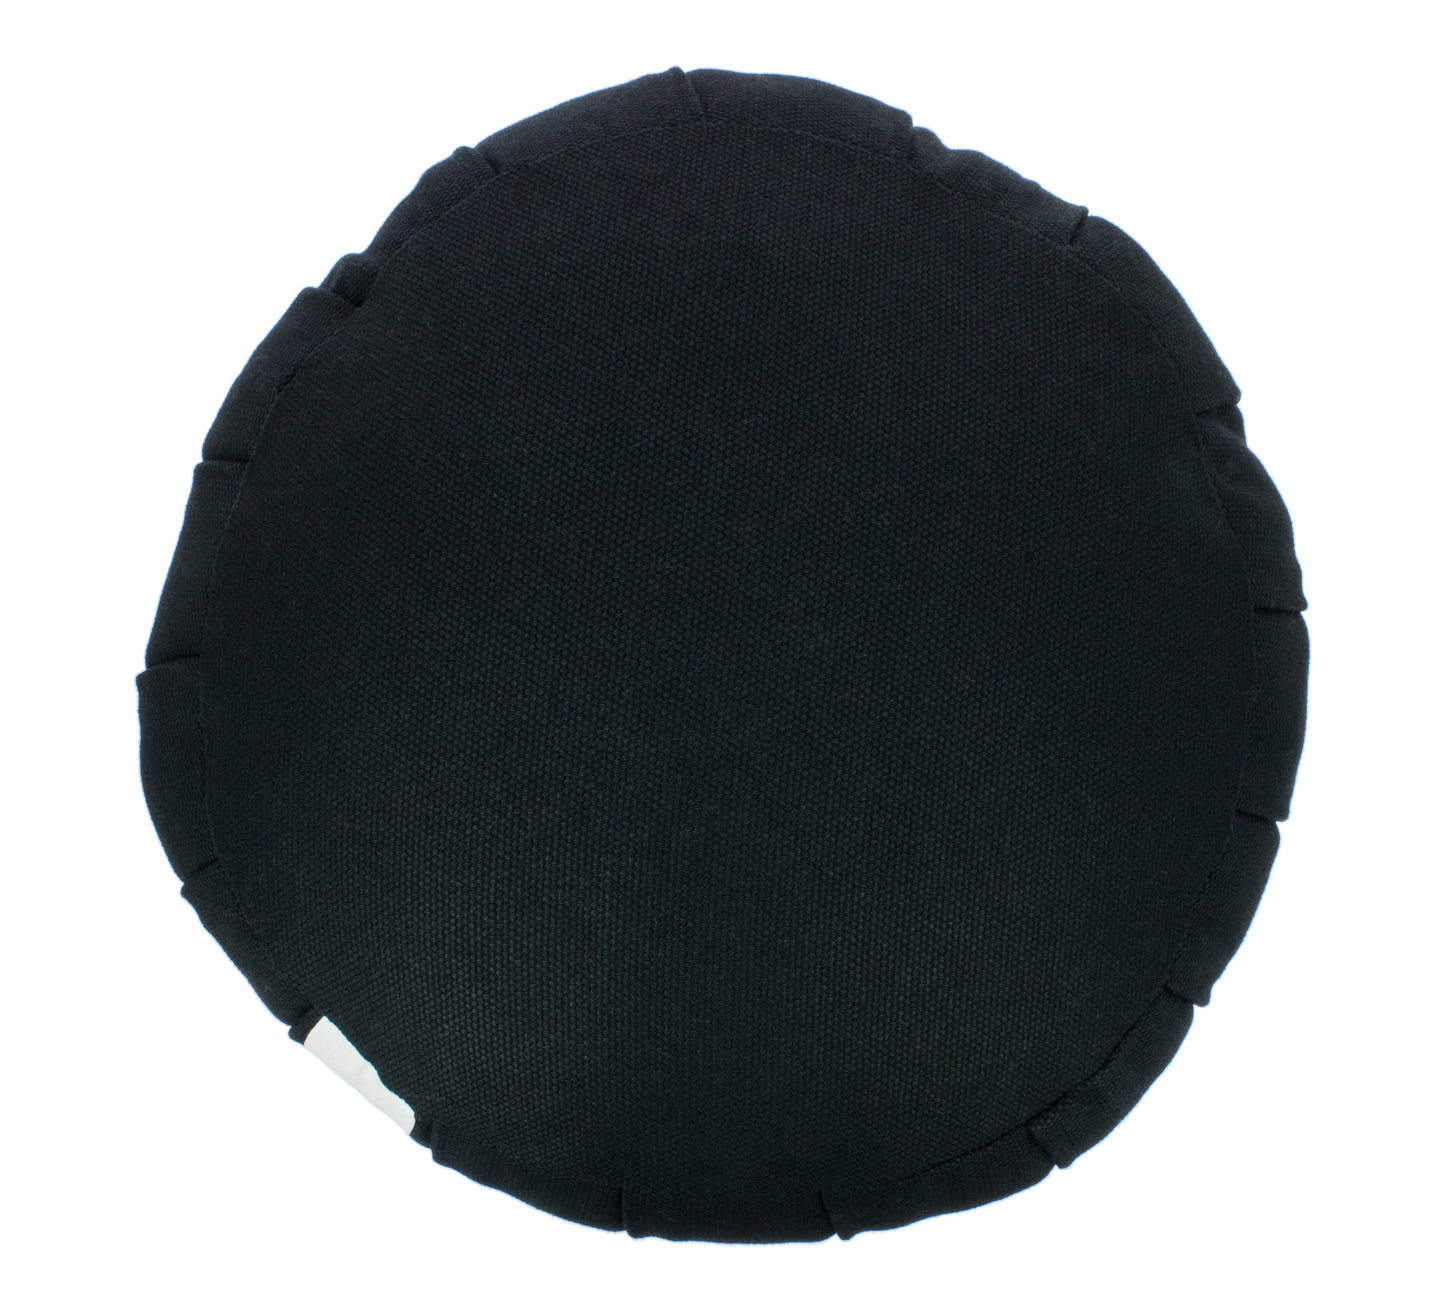 Kapok Round Zafu - Black, Large